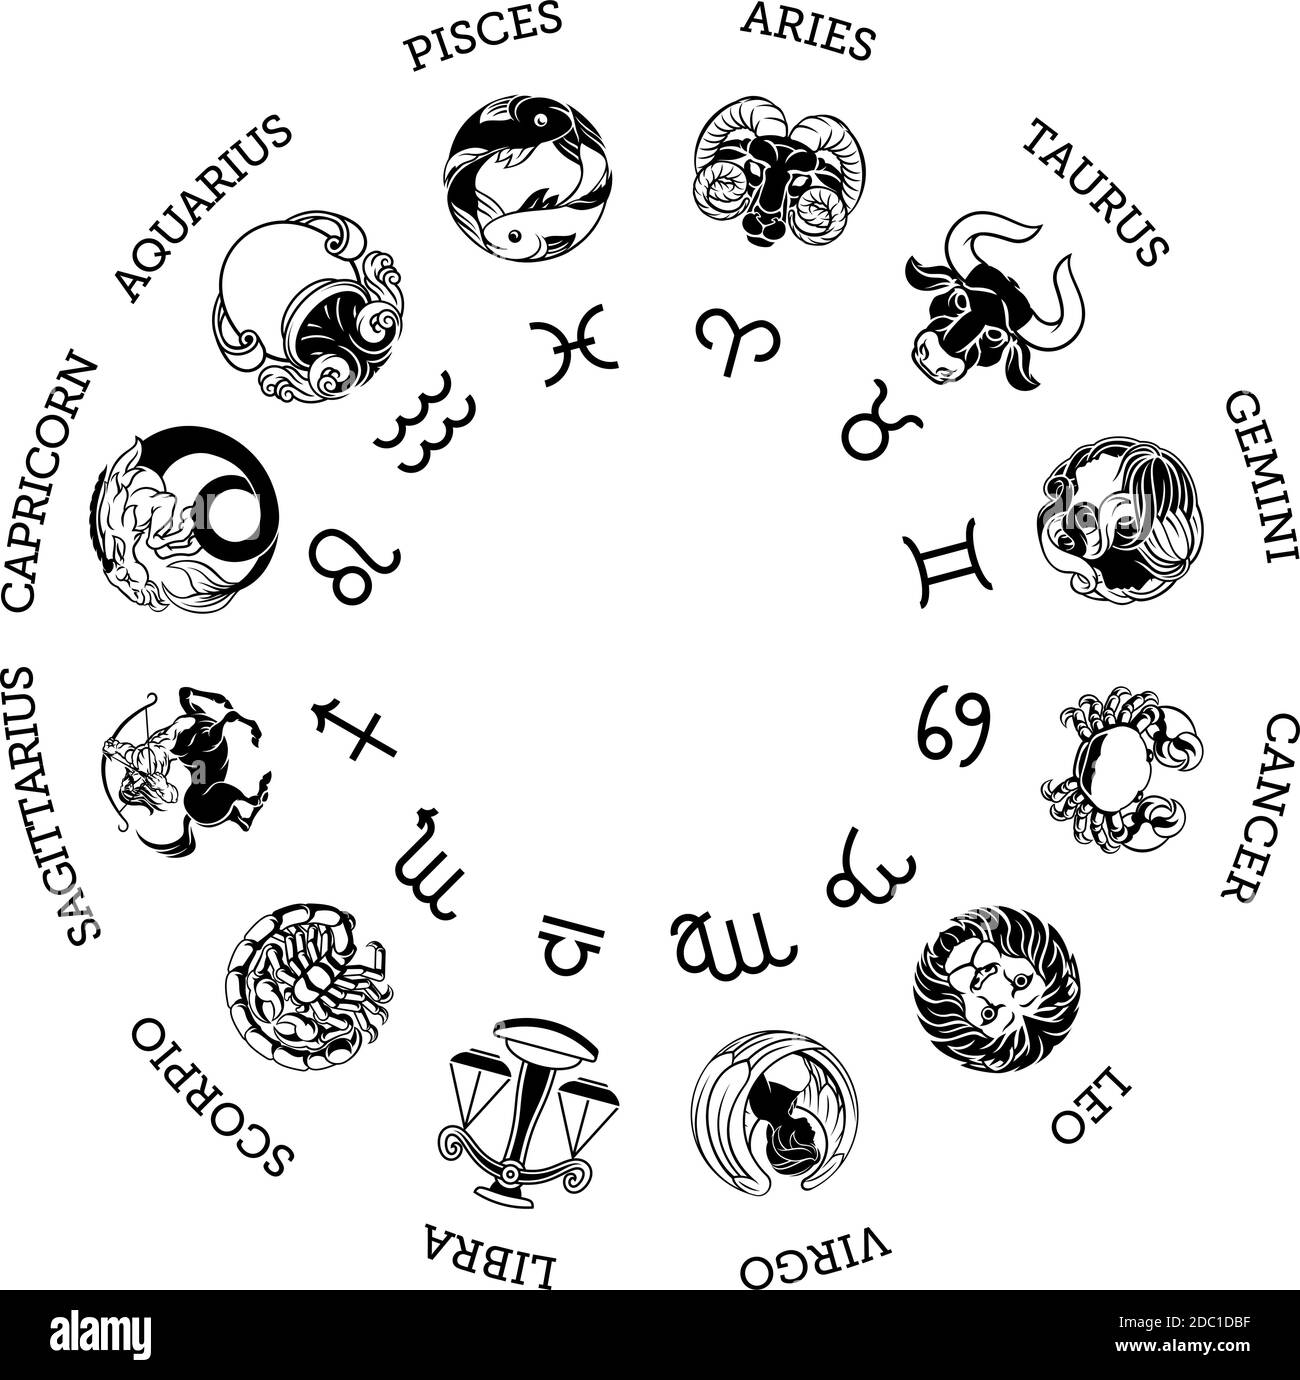 Astrology horoscope zodiac star signs symbols set Stock Vector